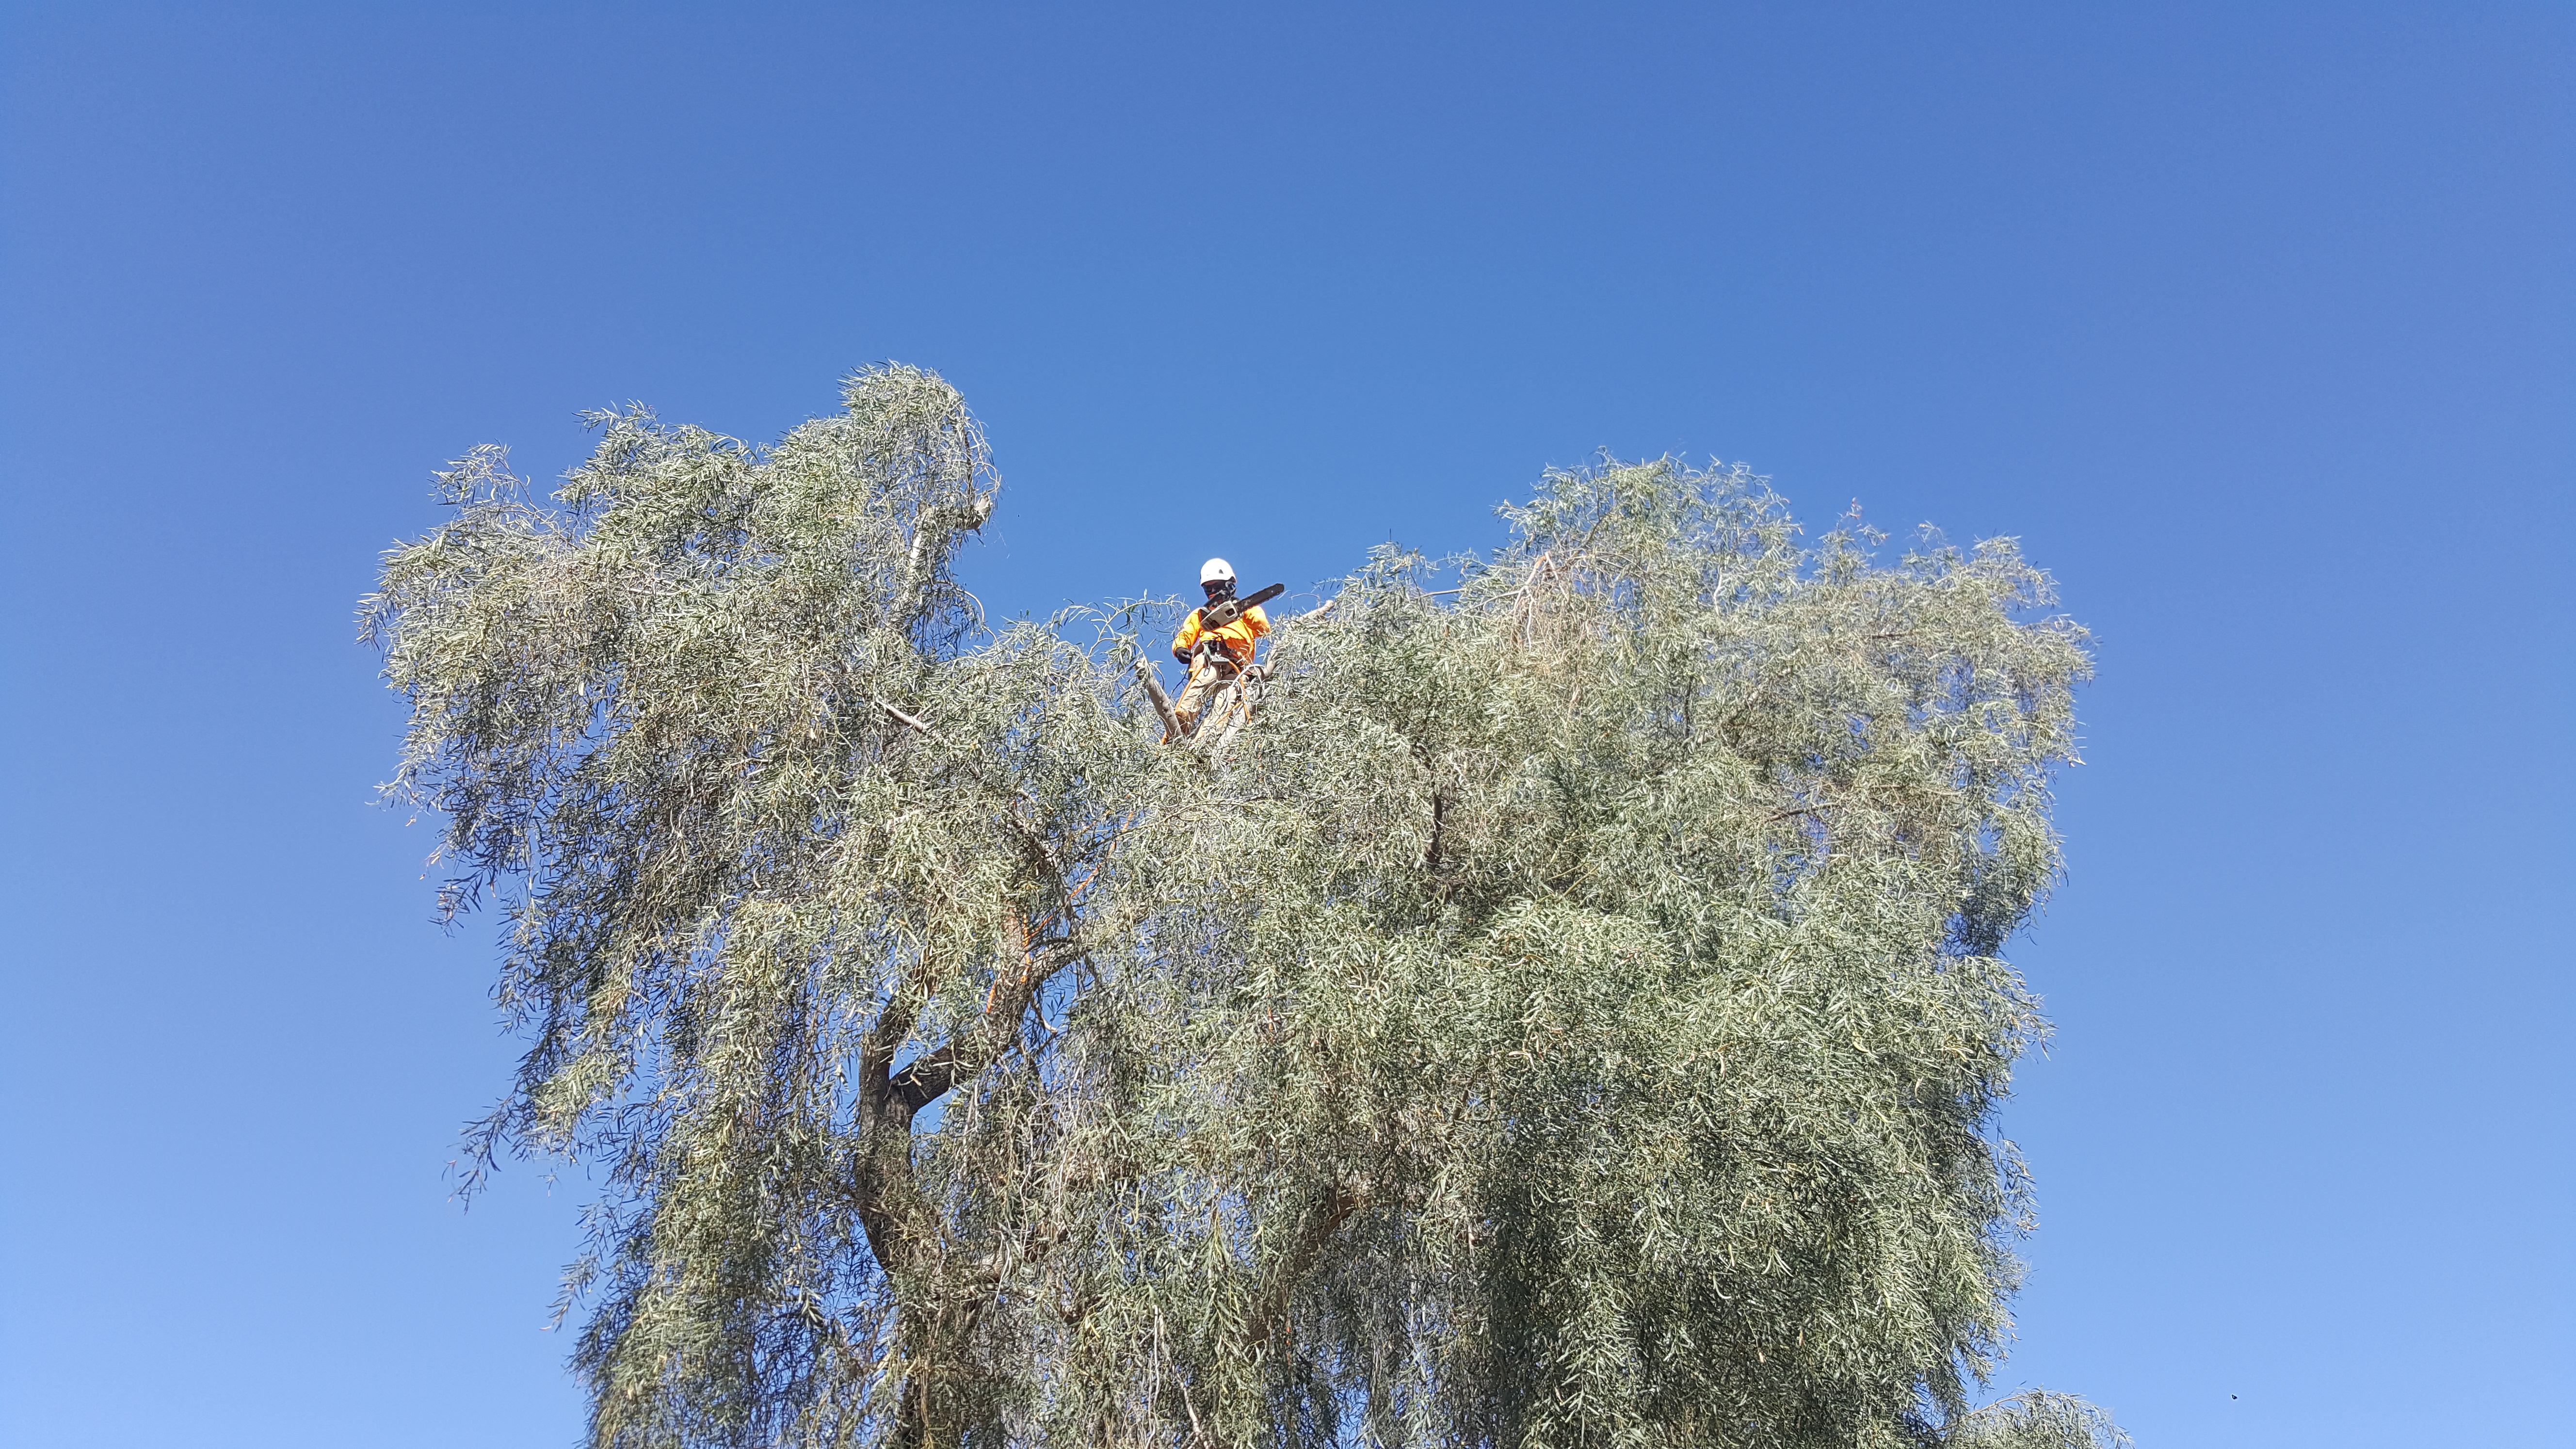 Tree Trimming Companies in Phoenix Arizona